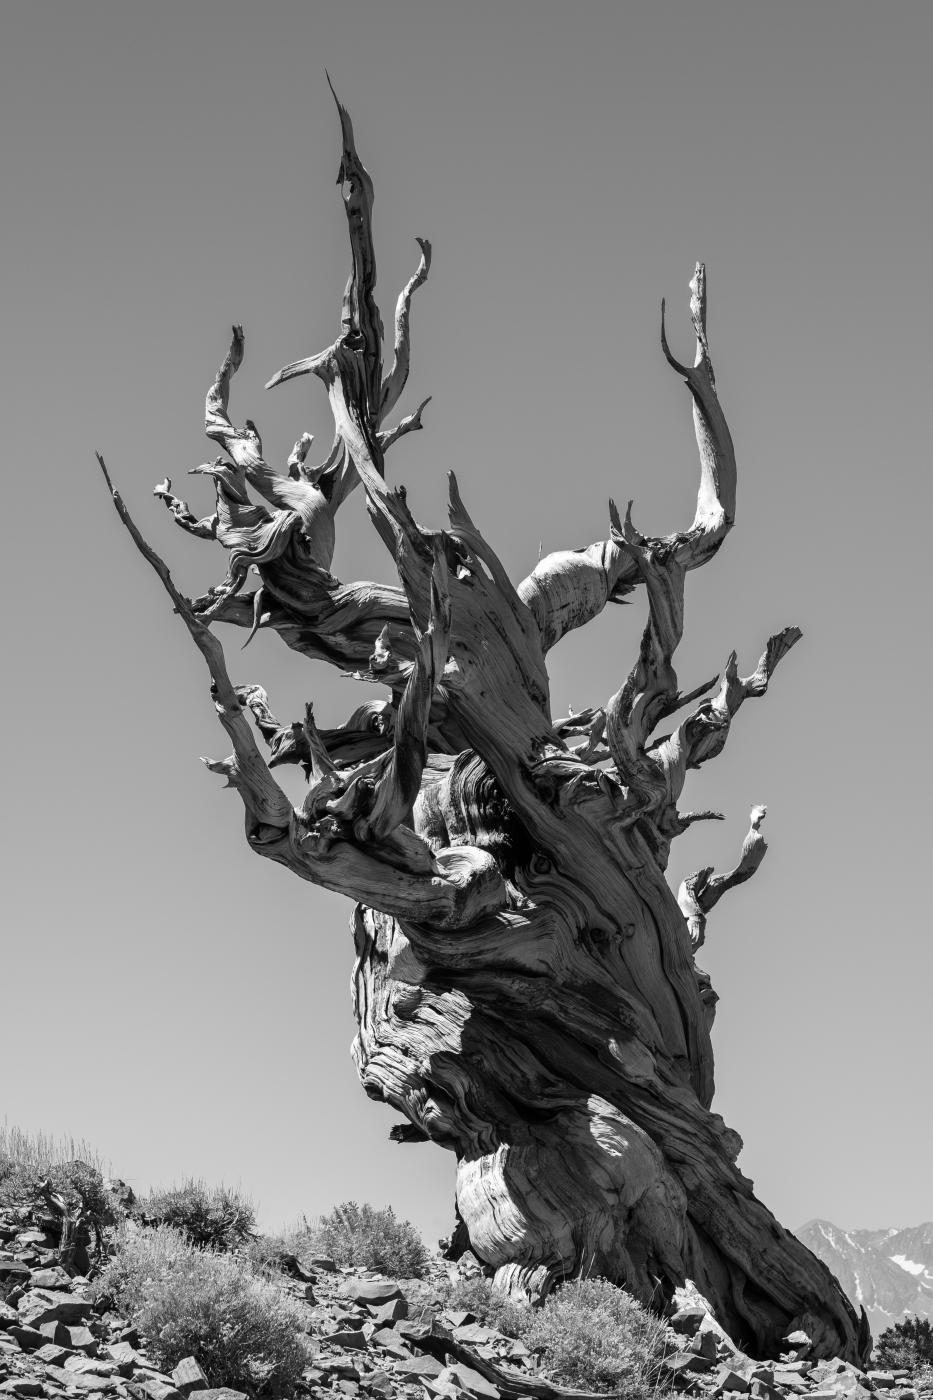 Bristlecone Pine | Buy this image